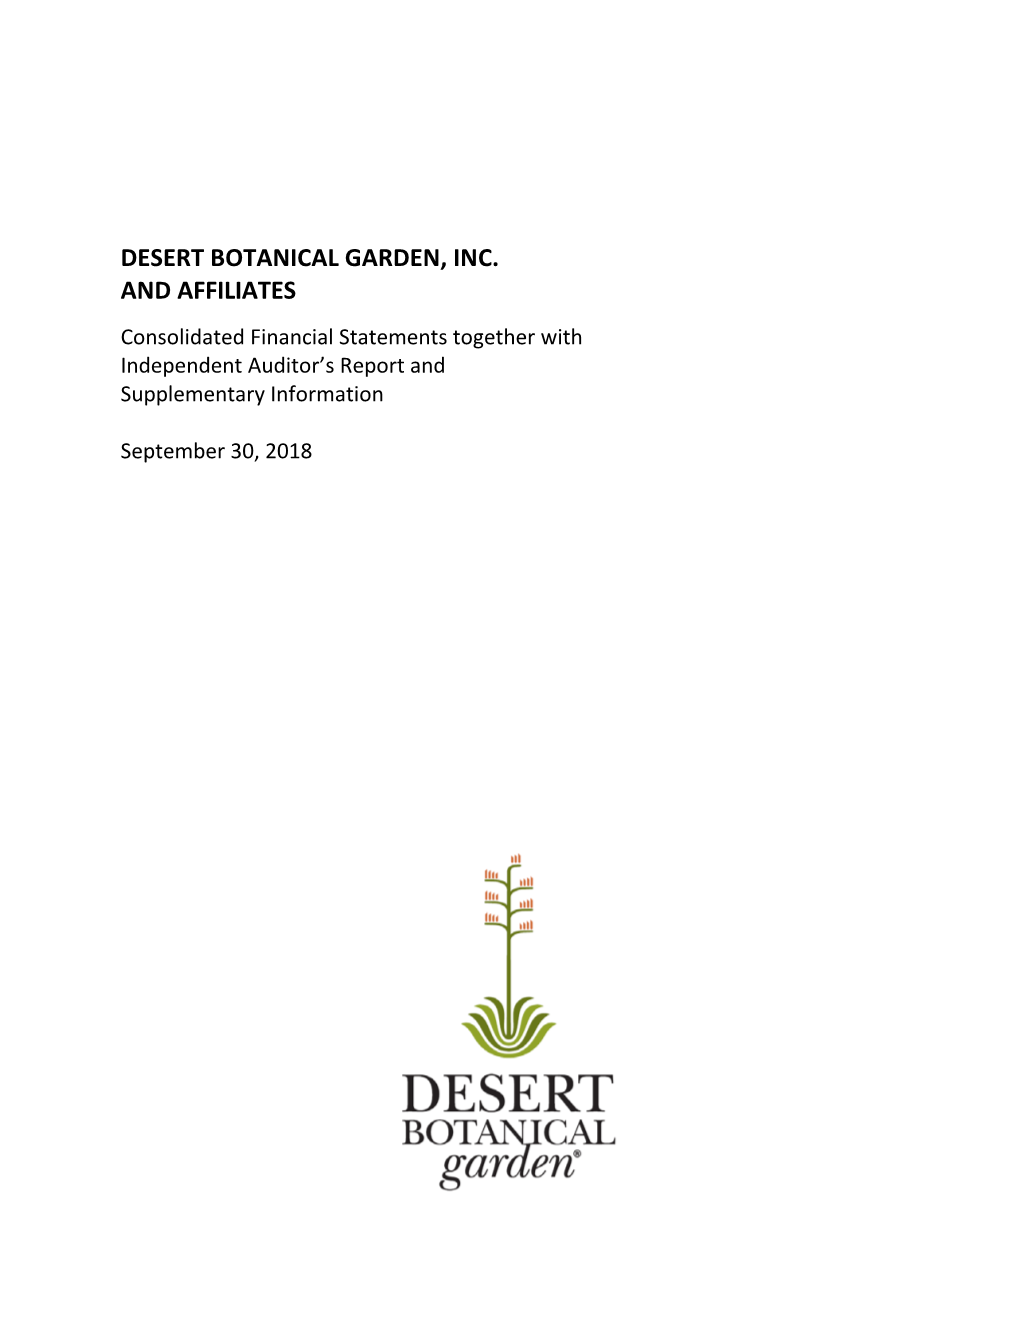 Desert Botanical Garden, Inc. and Affiliates